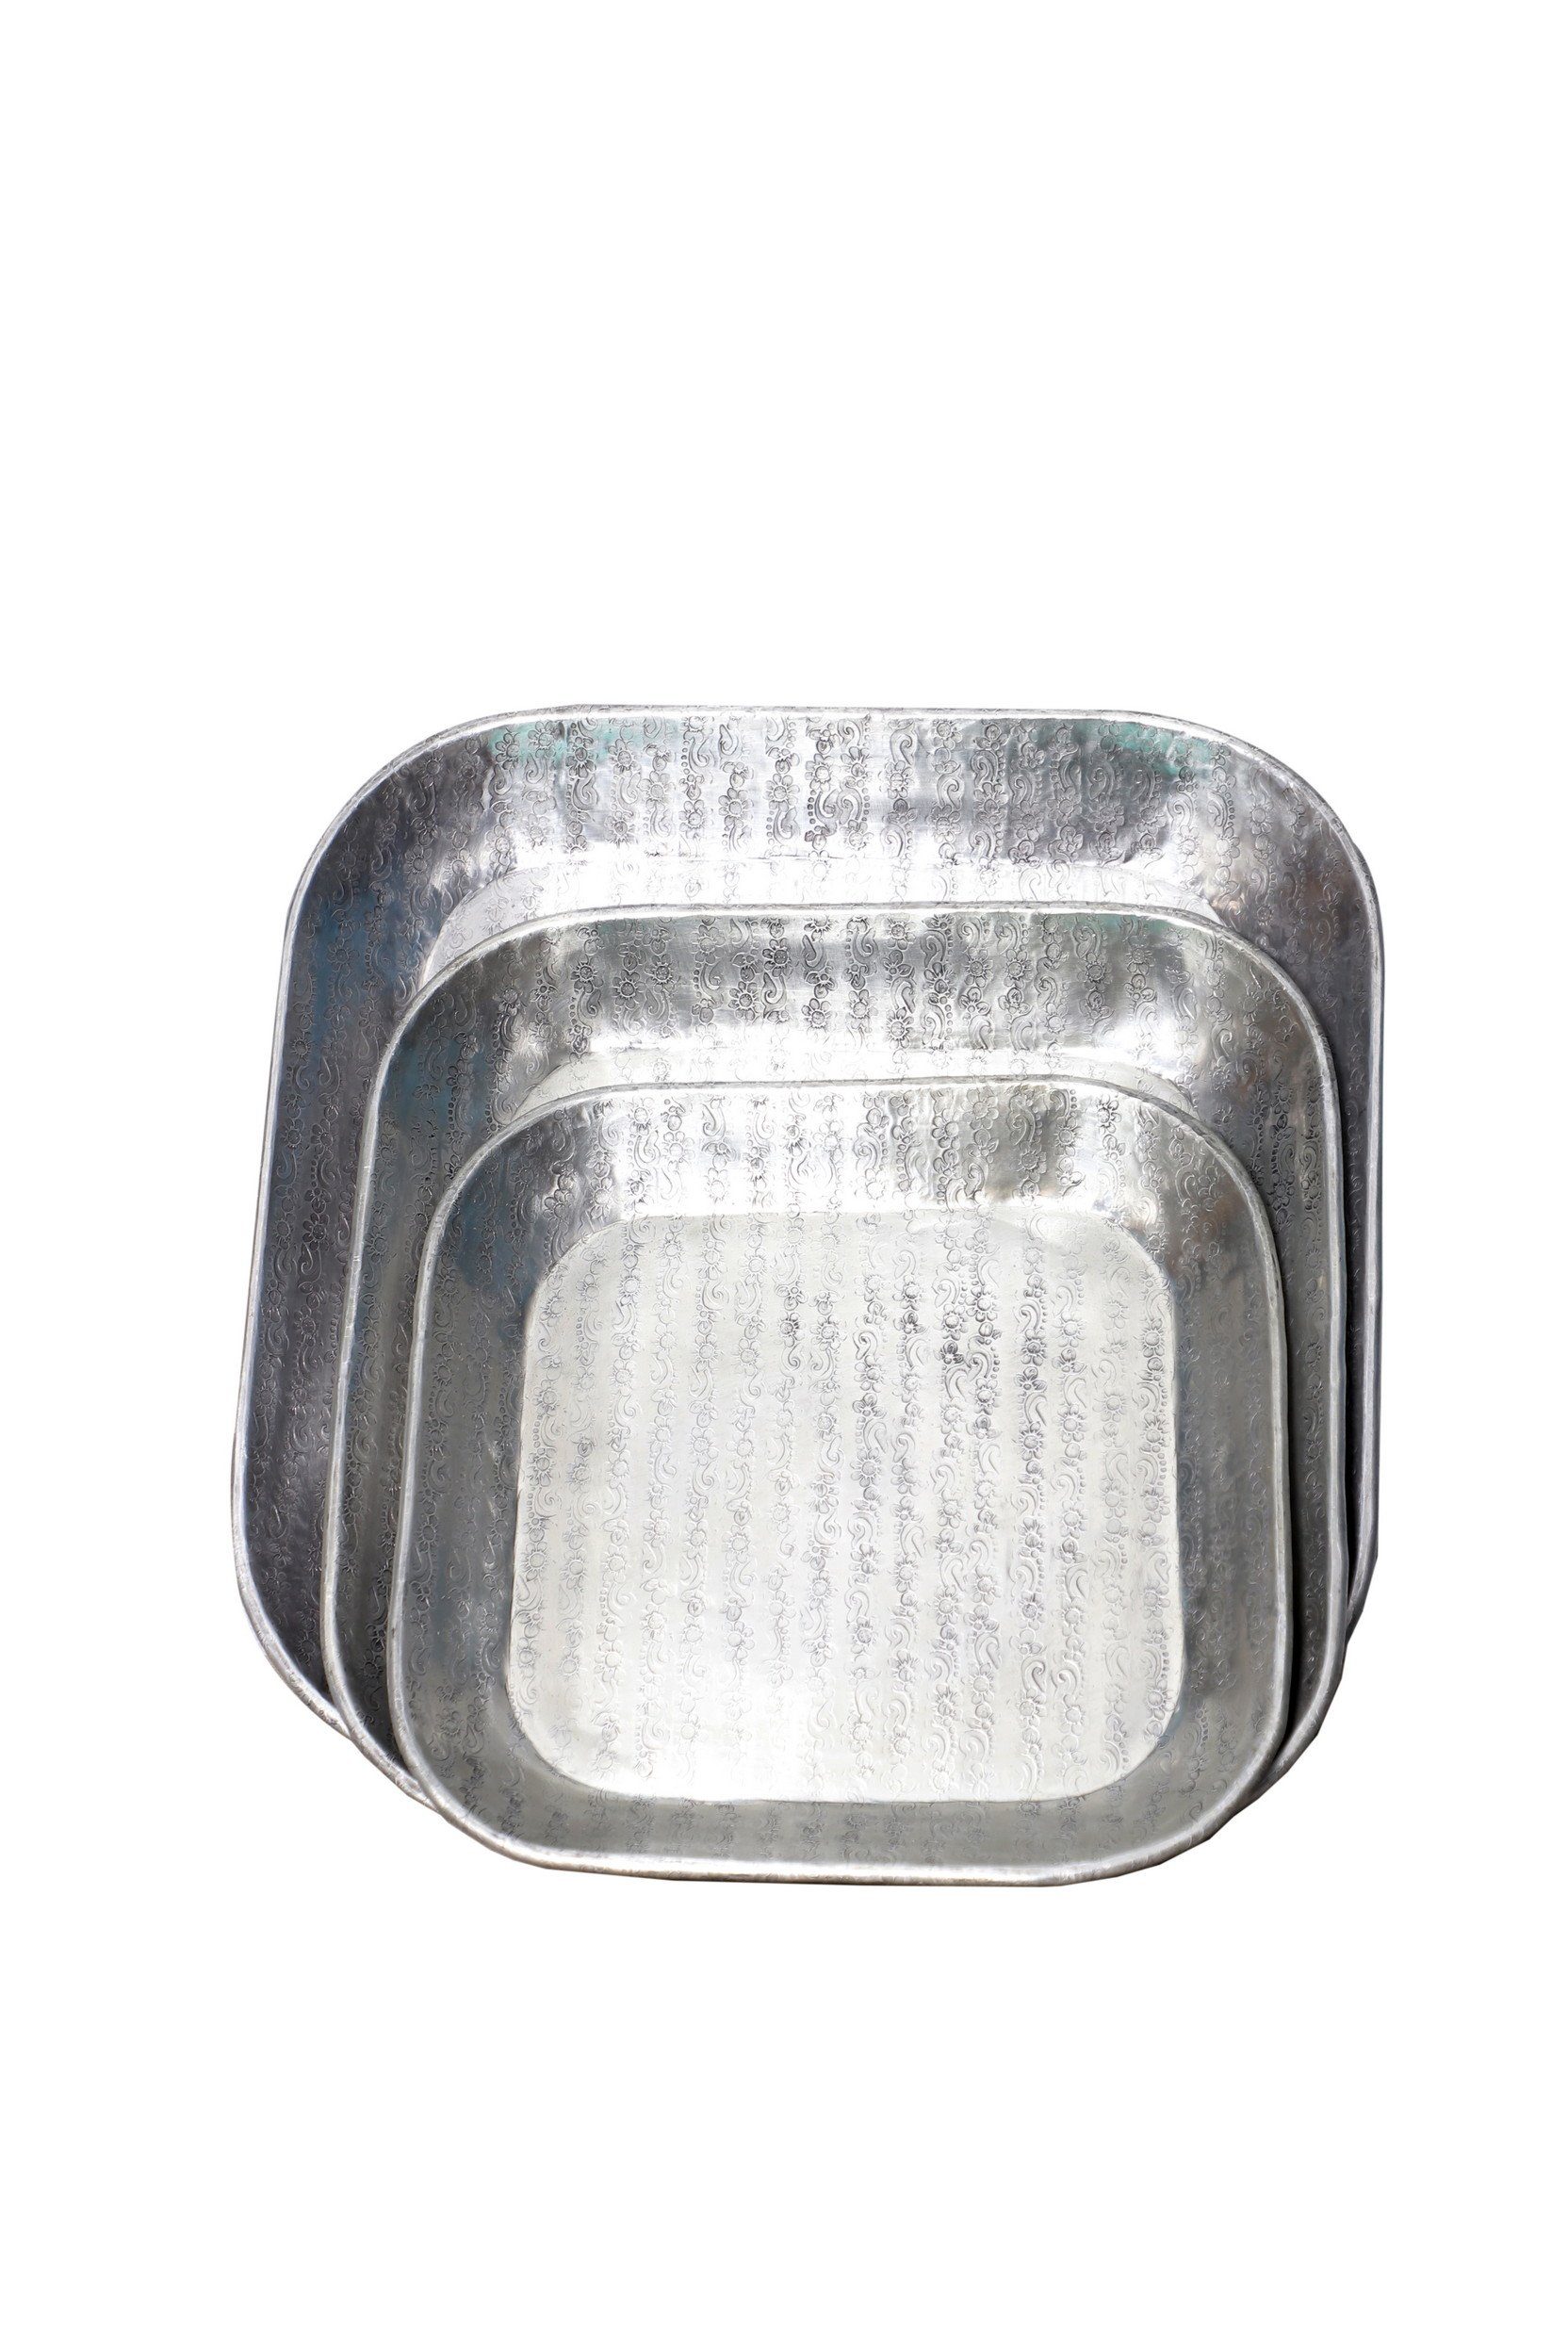 Casa Moro Tablett Orientalisches Tablett Prisma aus Aluminium mit Hammerschlag Optik, Aluminium, (Set, 3-tlg), Weihnachten Deko Tablett Boho Serviertablett Silber